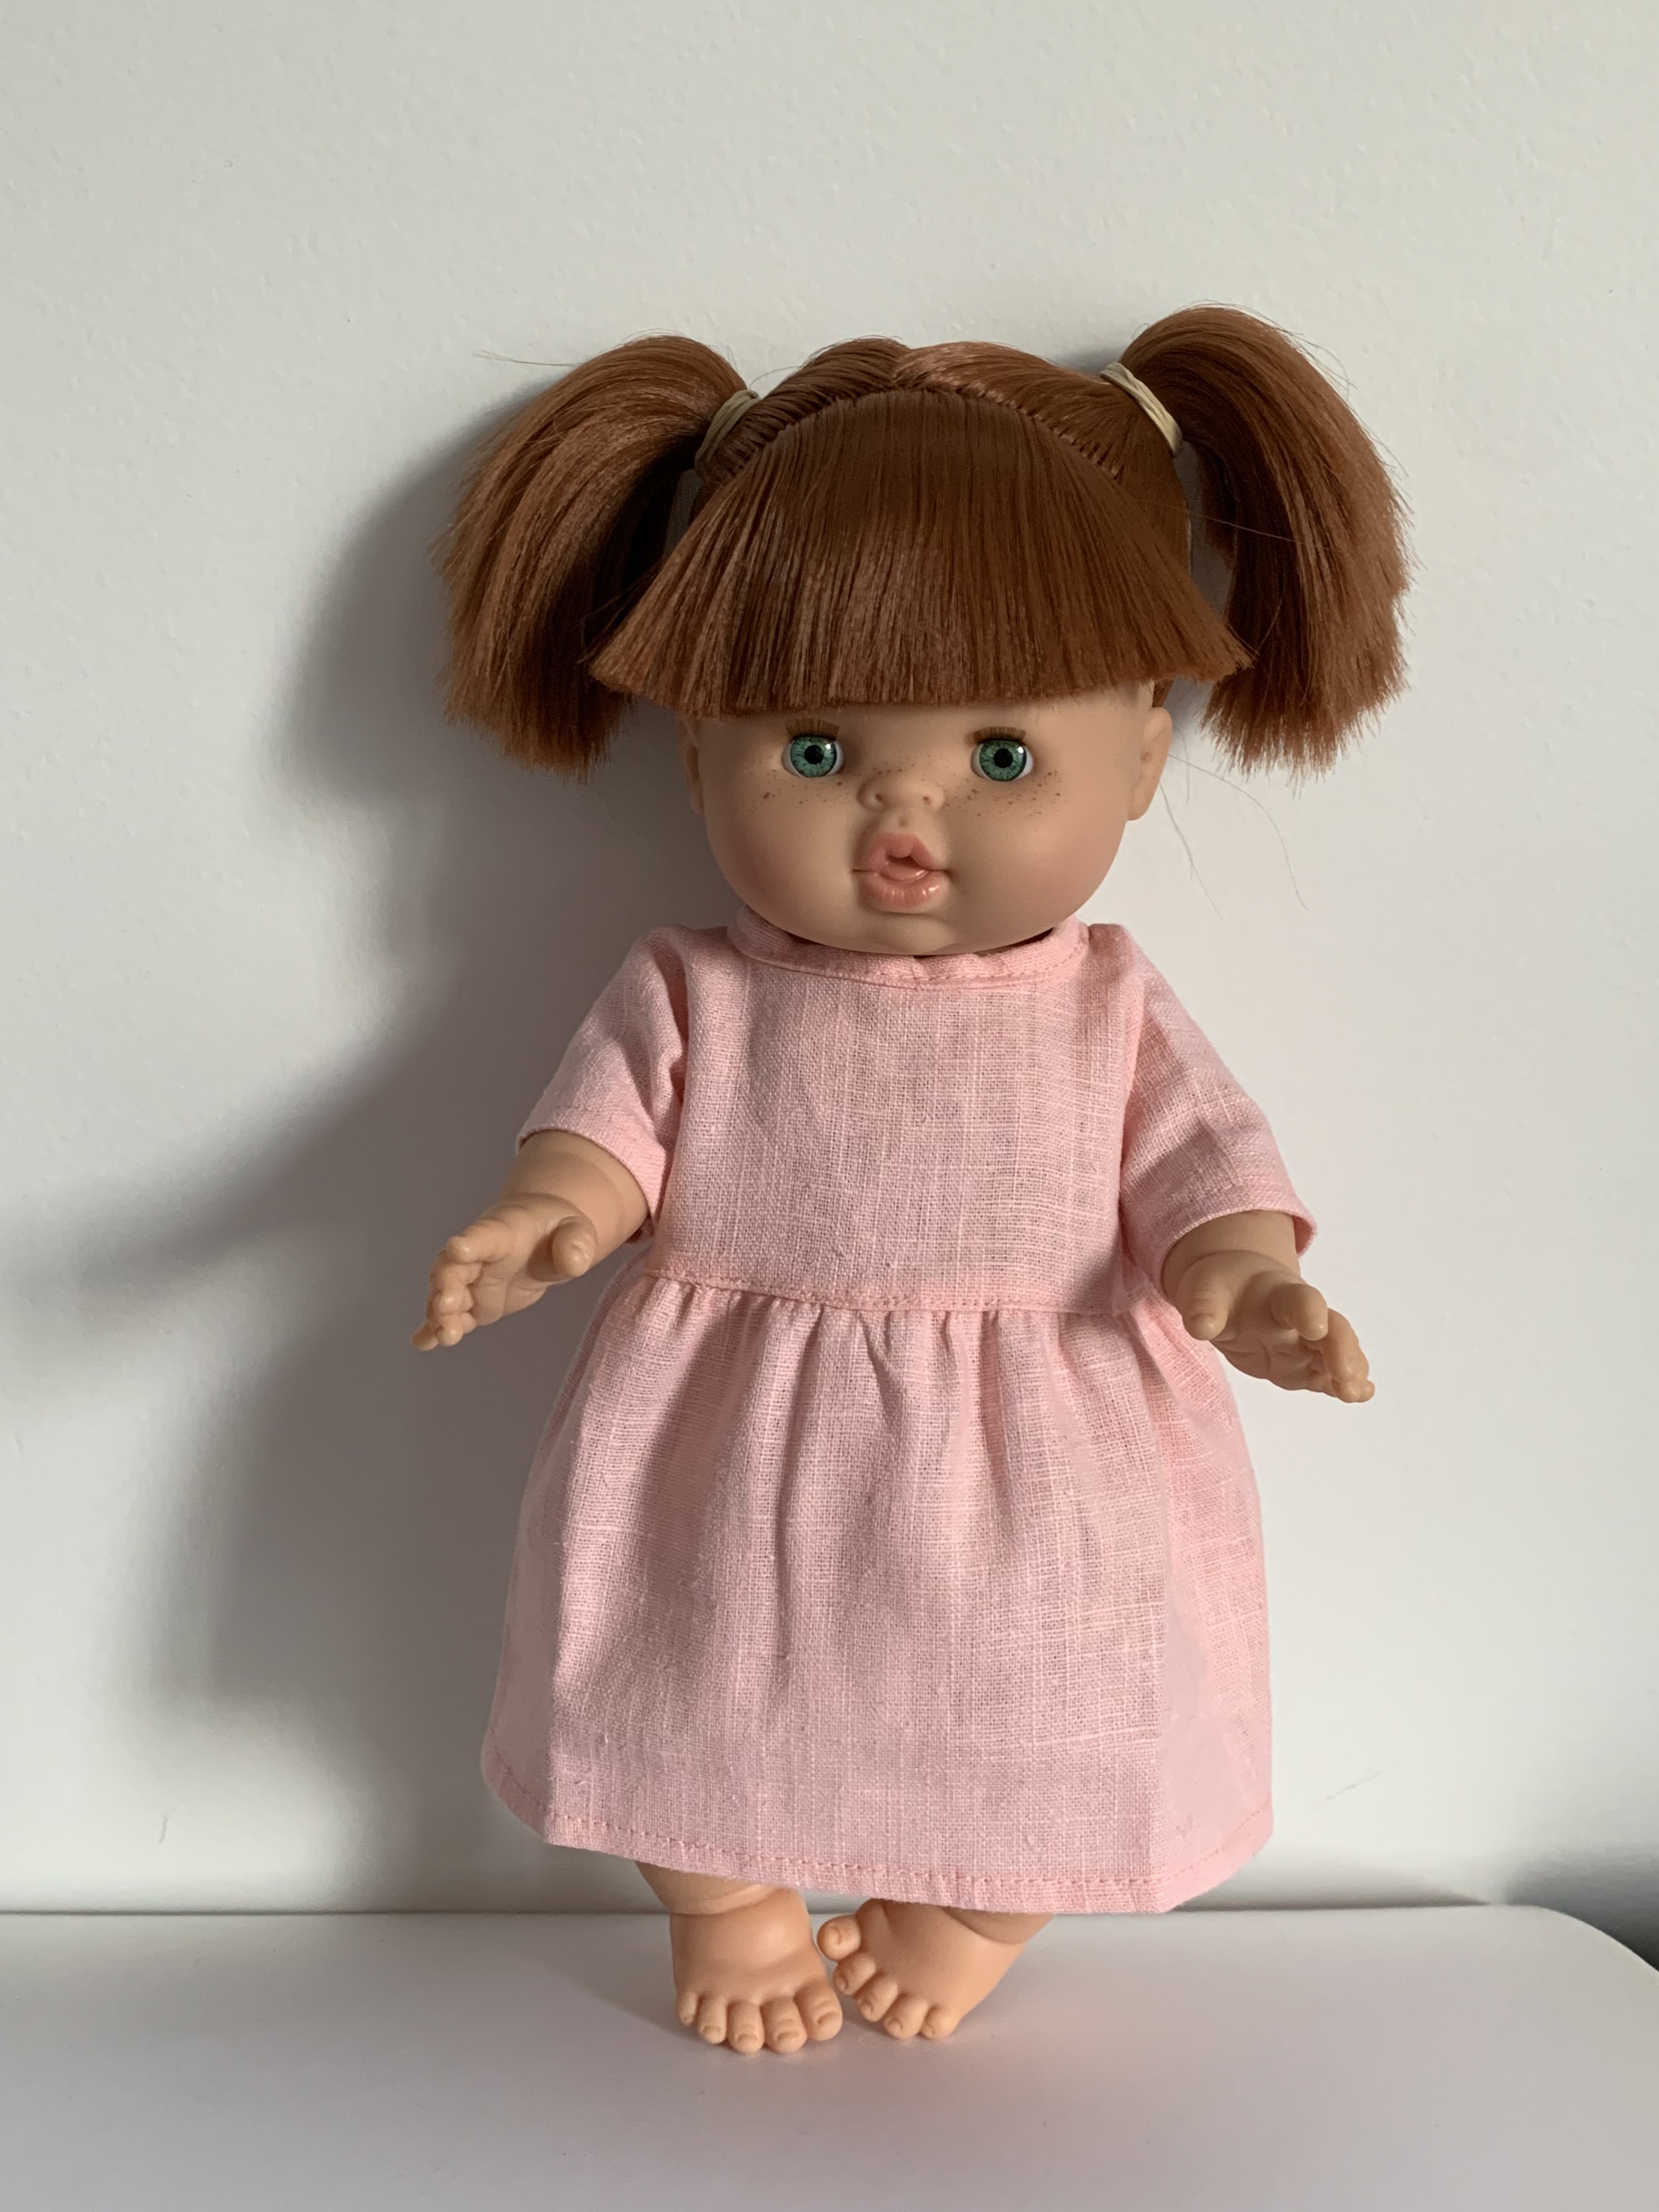 Minikane Gabrielle Paola Reina Doll with Her Linen Dress